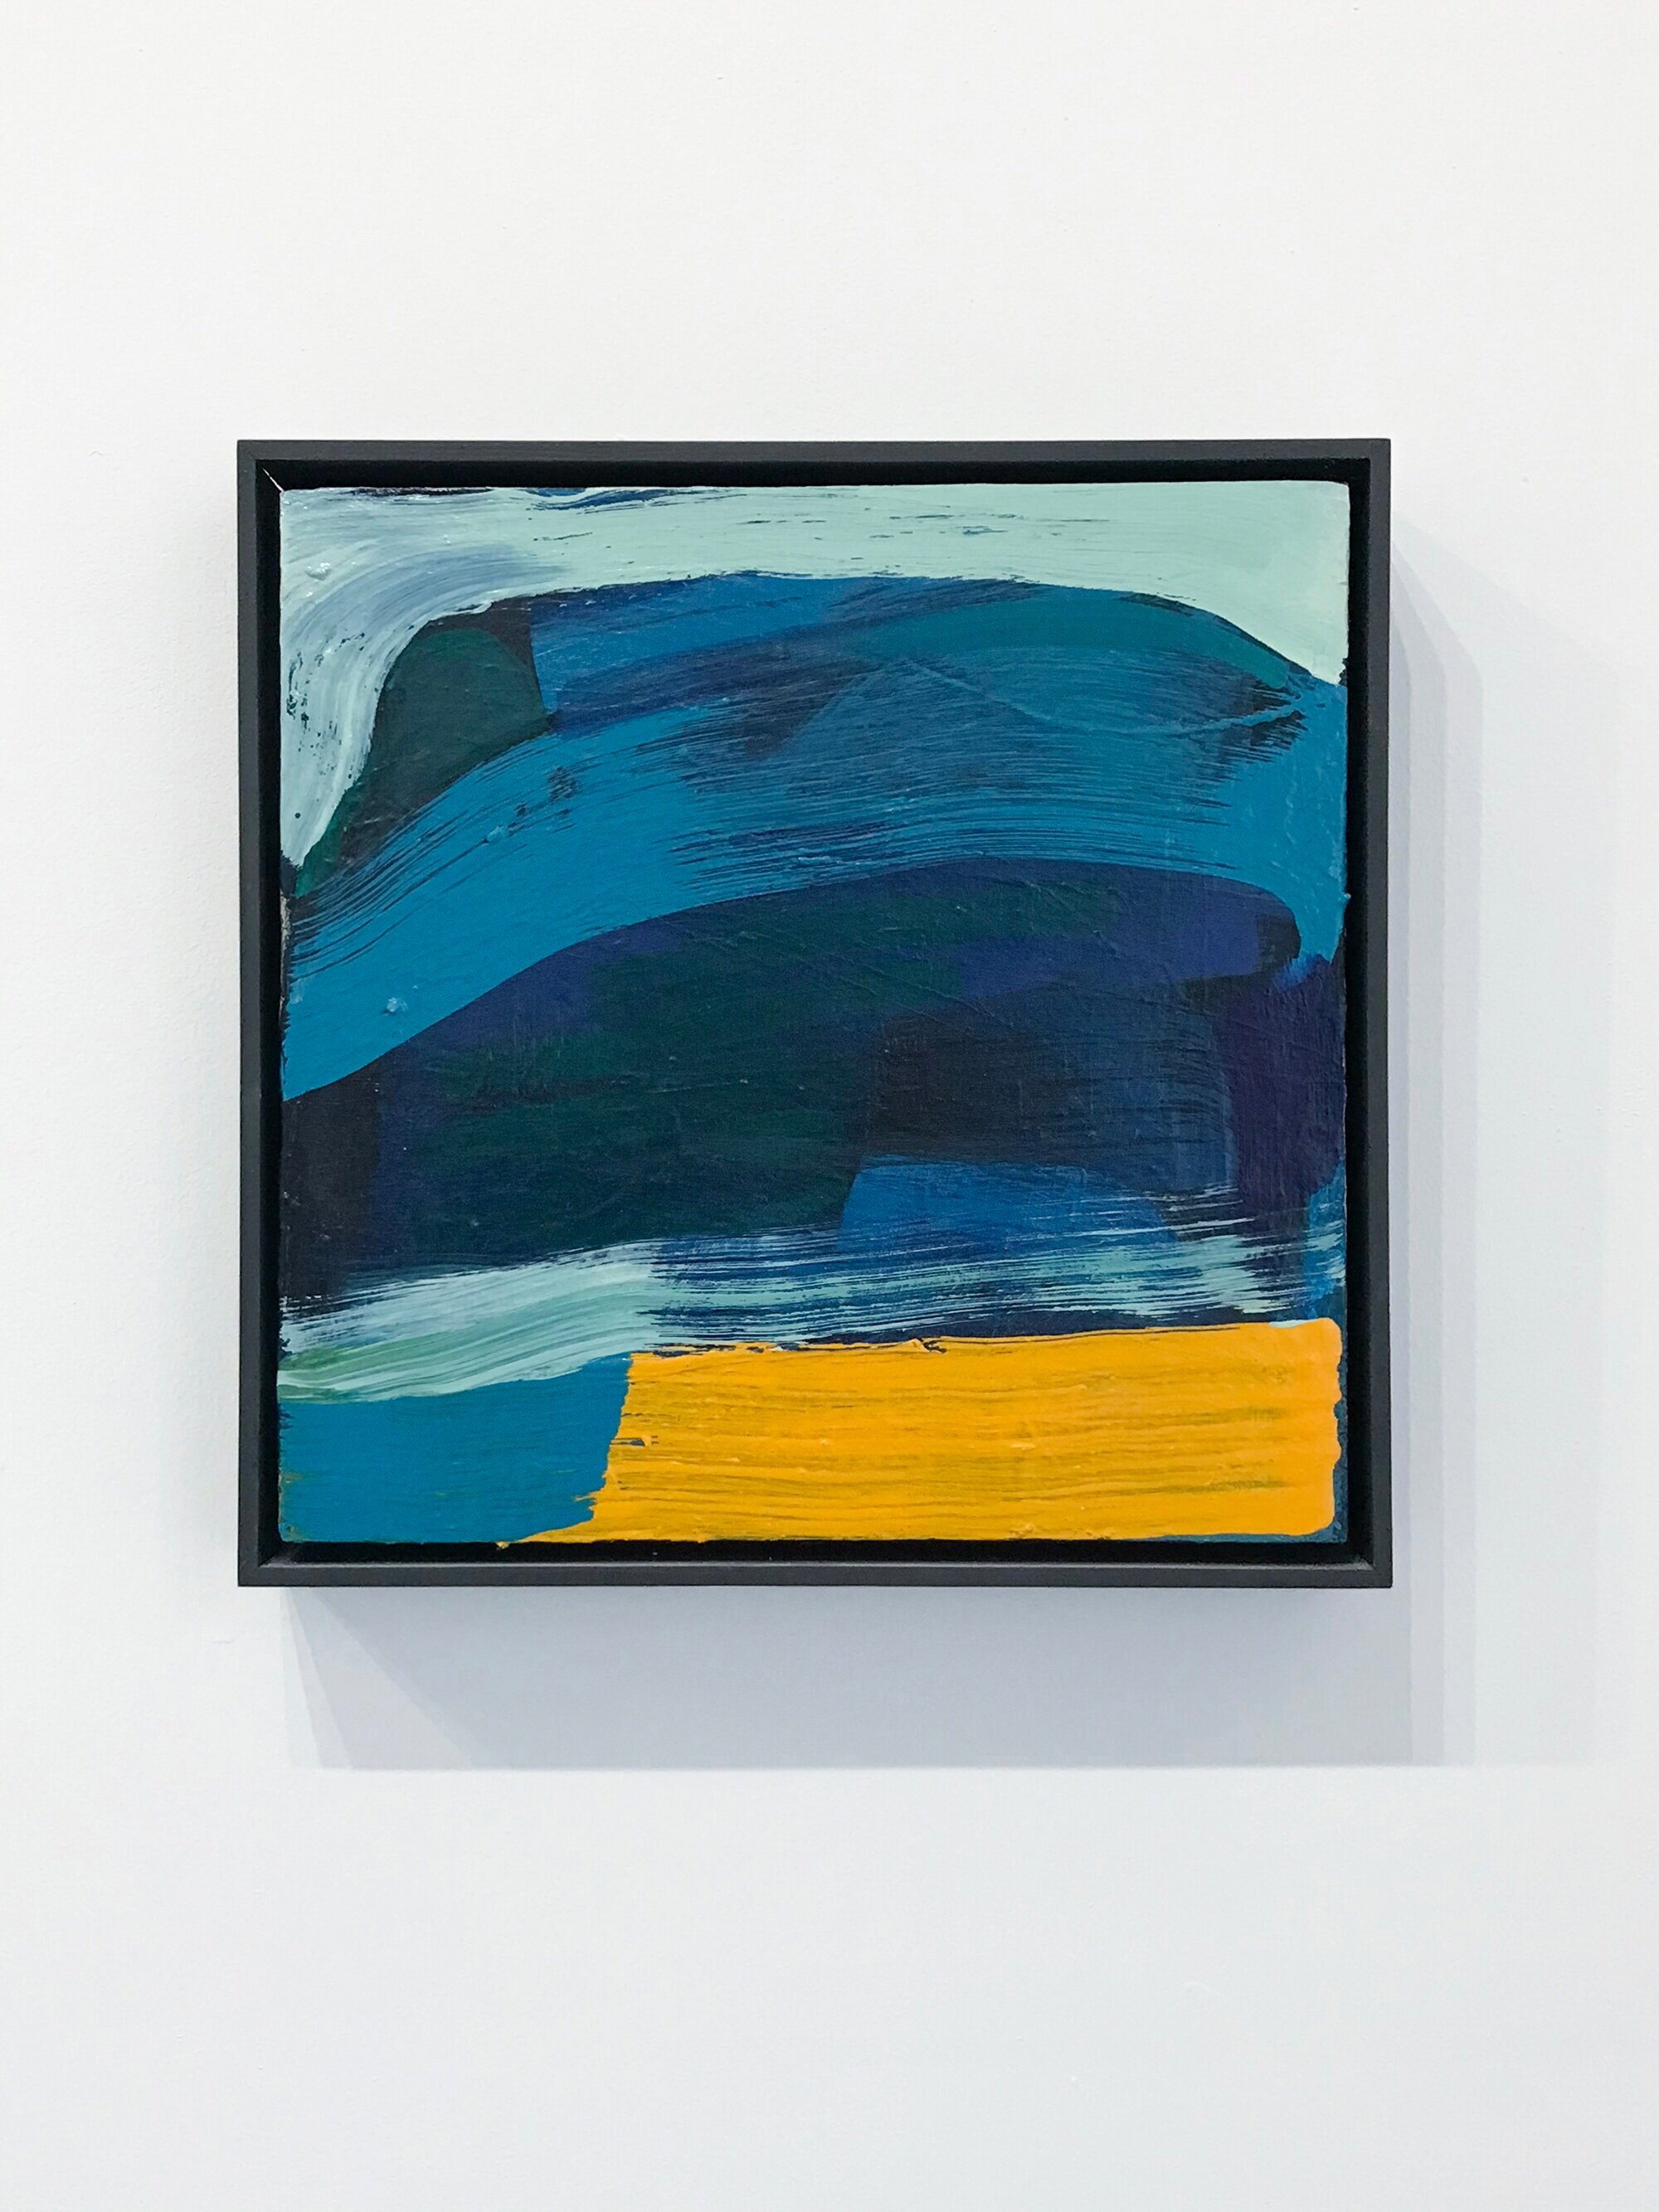 Siwan Gillick, 'Foel Fawr' 2019, 33x33cm including frame, oil on canvas. NFS.